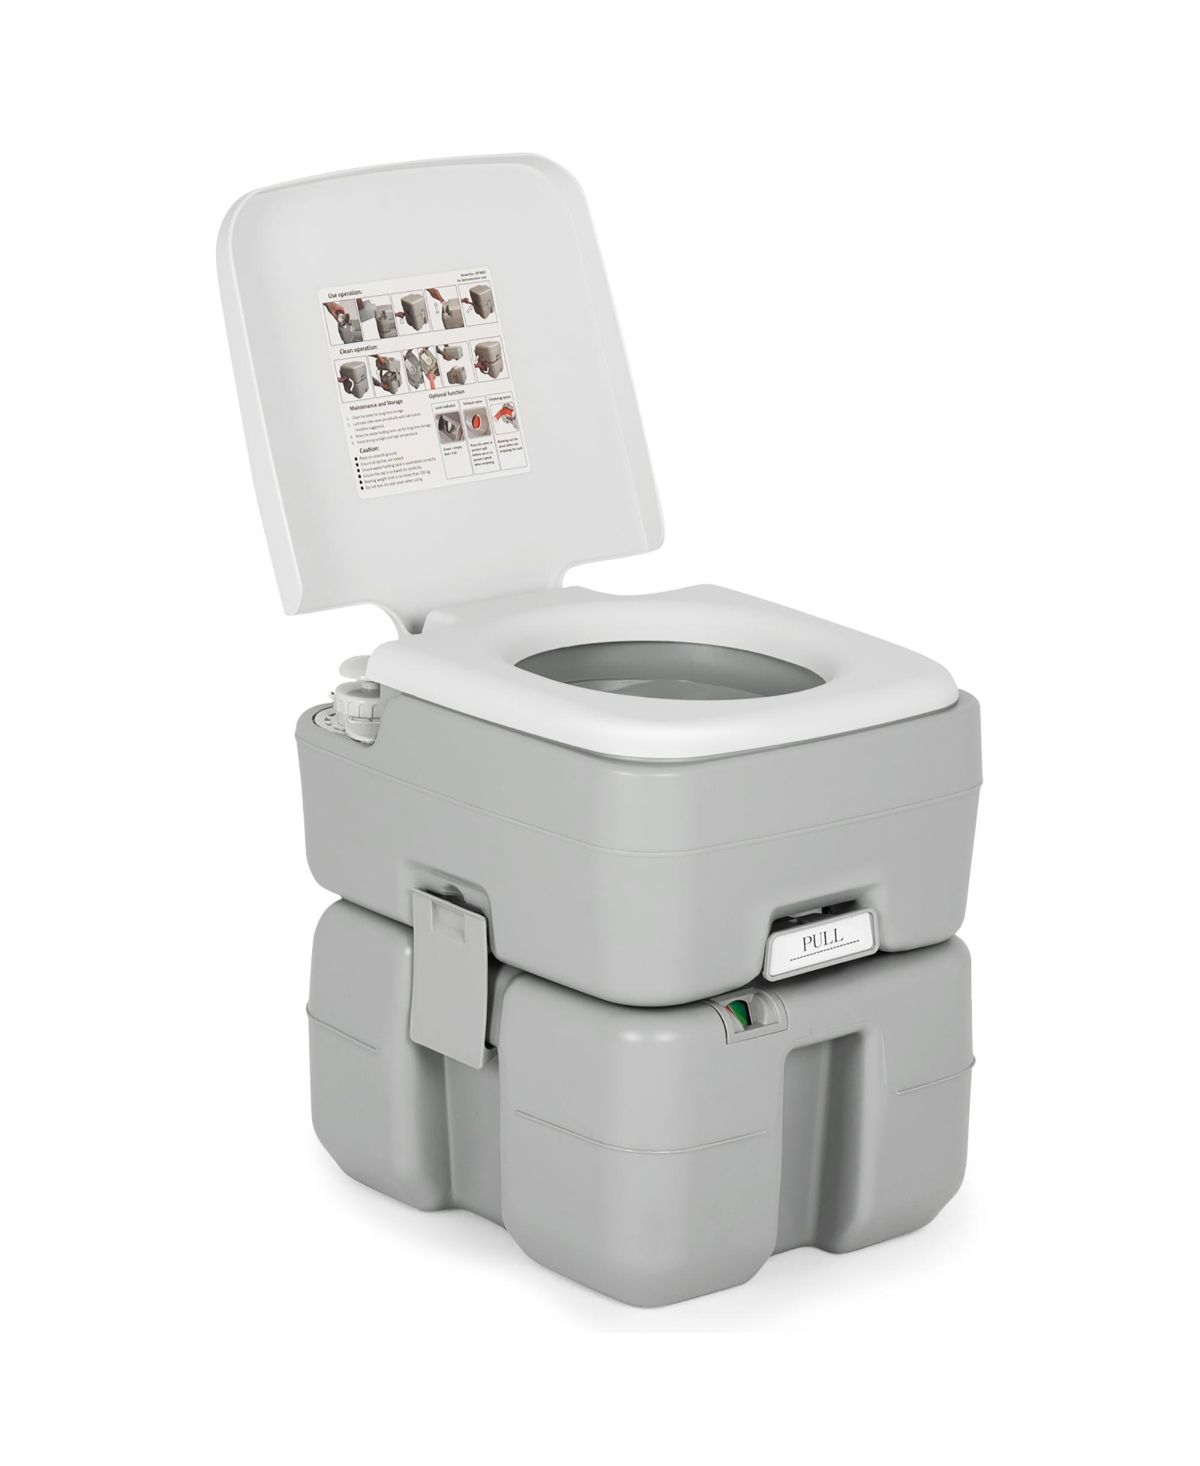 5.3 Gallon Portable Travel Toilet Outdoor Camping Toilet w/ Piston Pump Flush - Grey